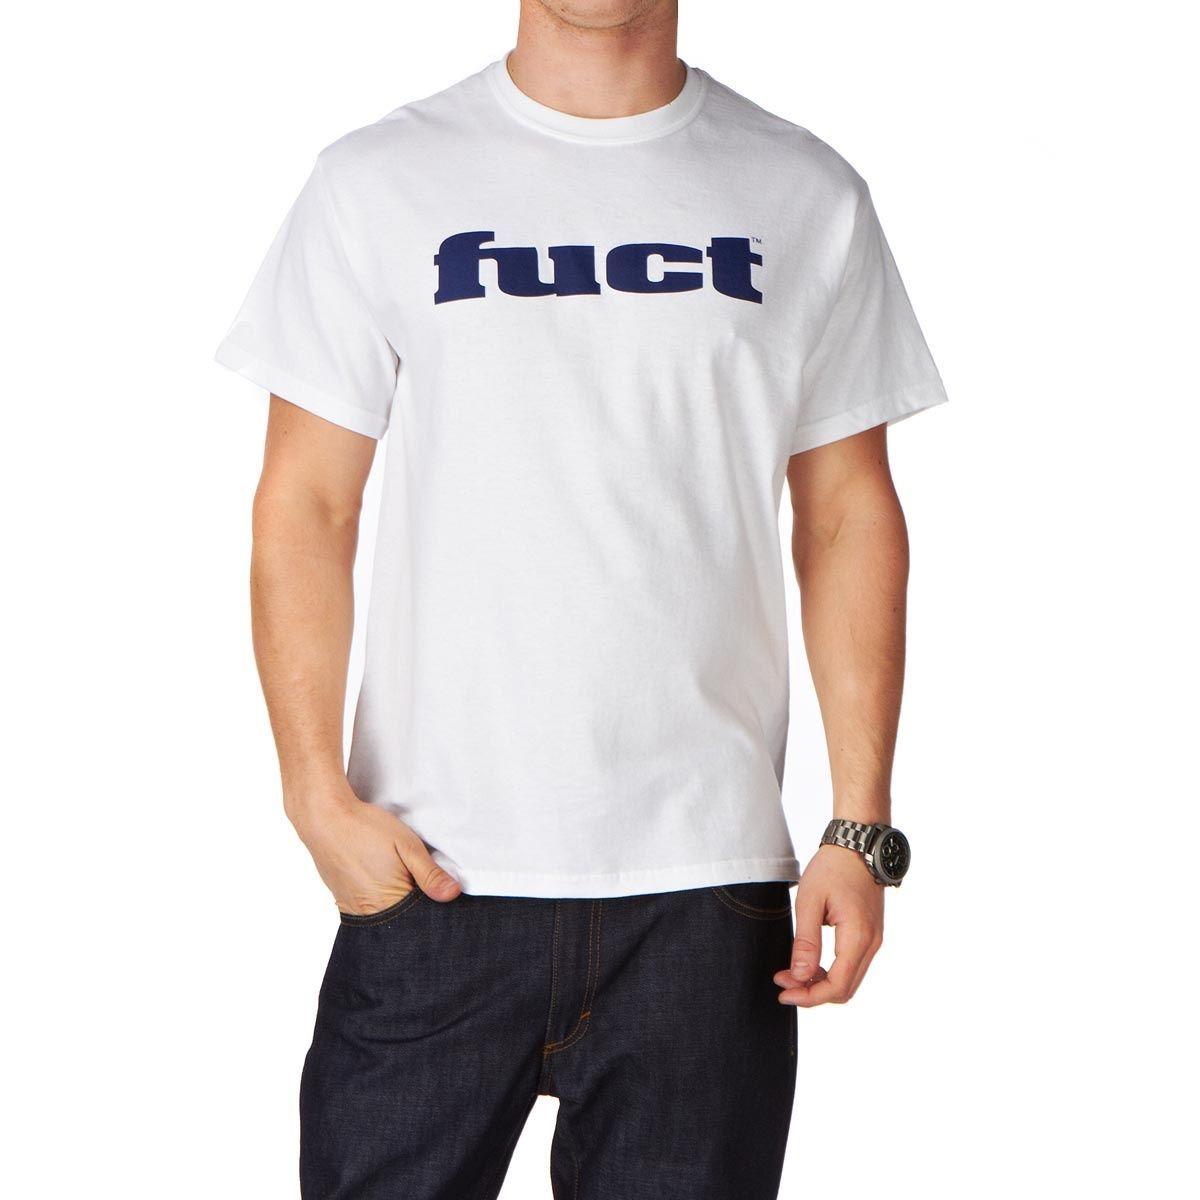 Fuct Logo - Fuct Og Logo T-Shirt - Navy | Free Delivery Options